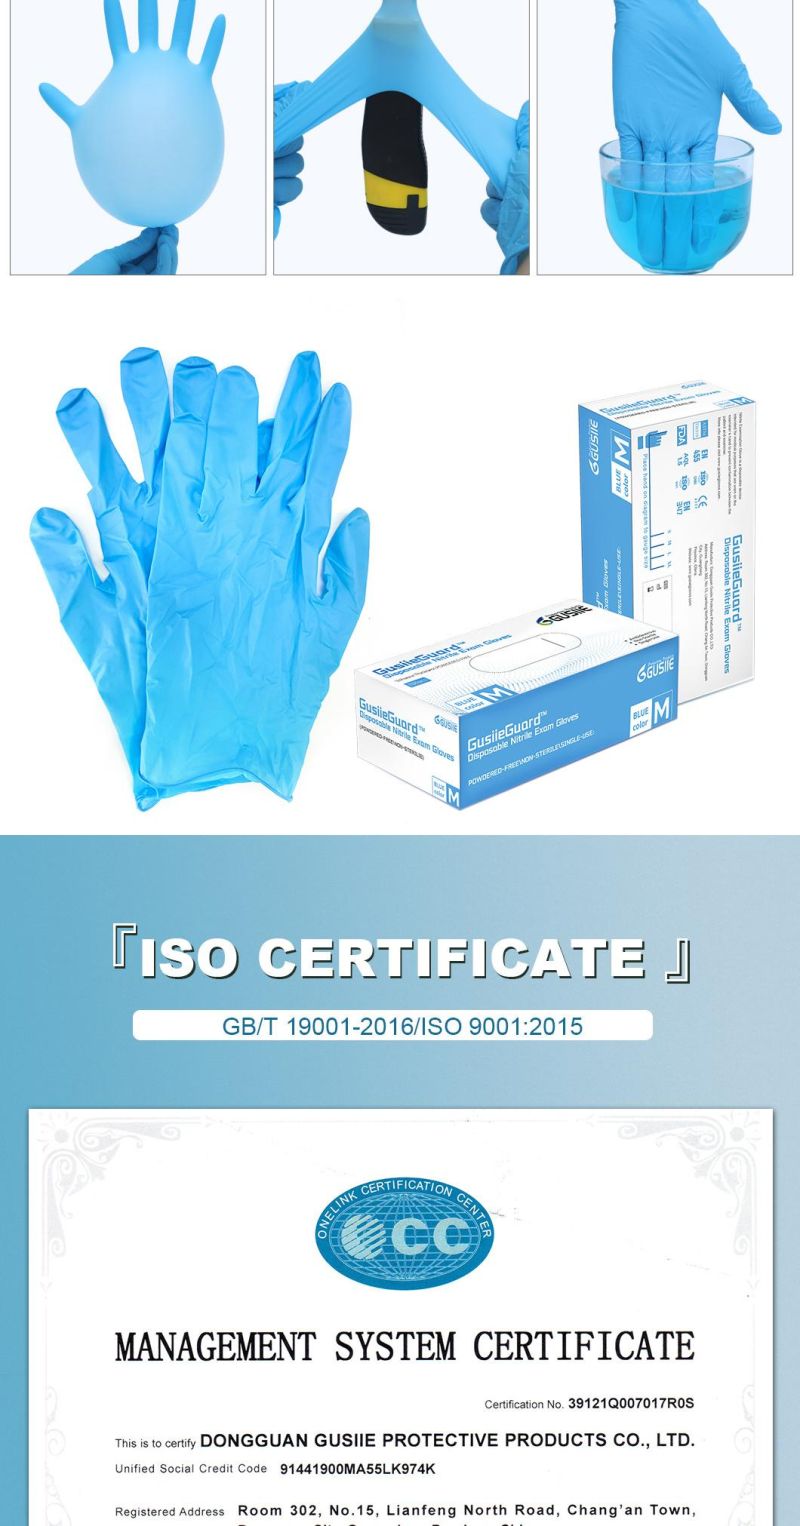 Gusiie Disposable Powder-Free Nitrile Protective Medical Examination Gloves